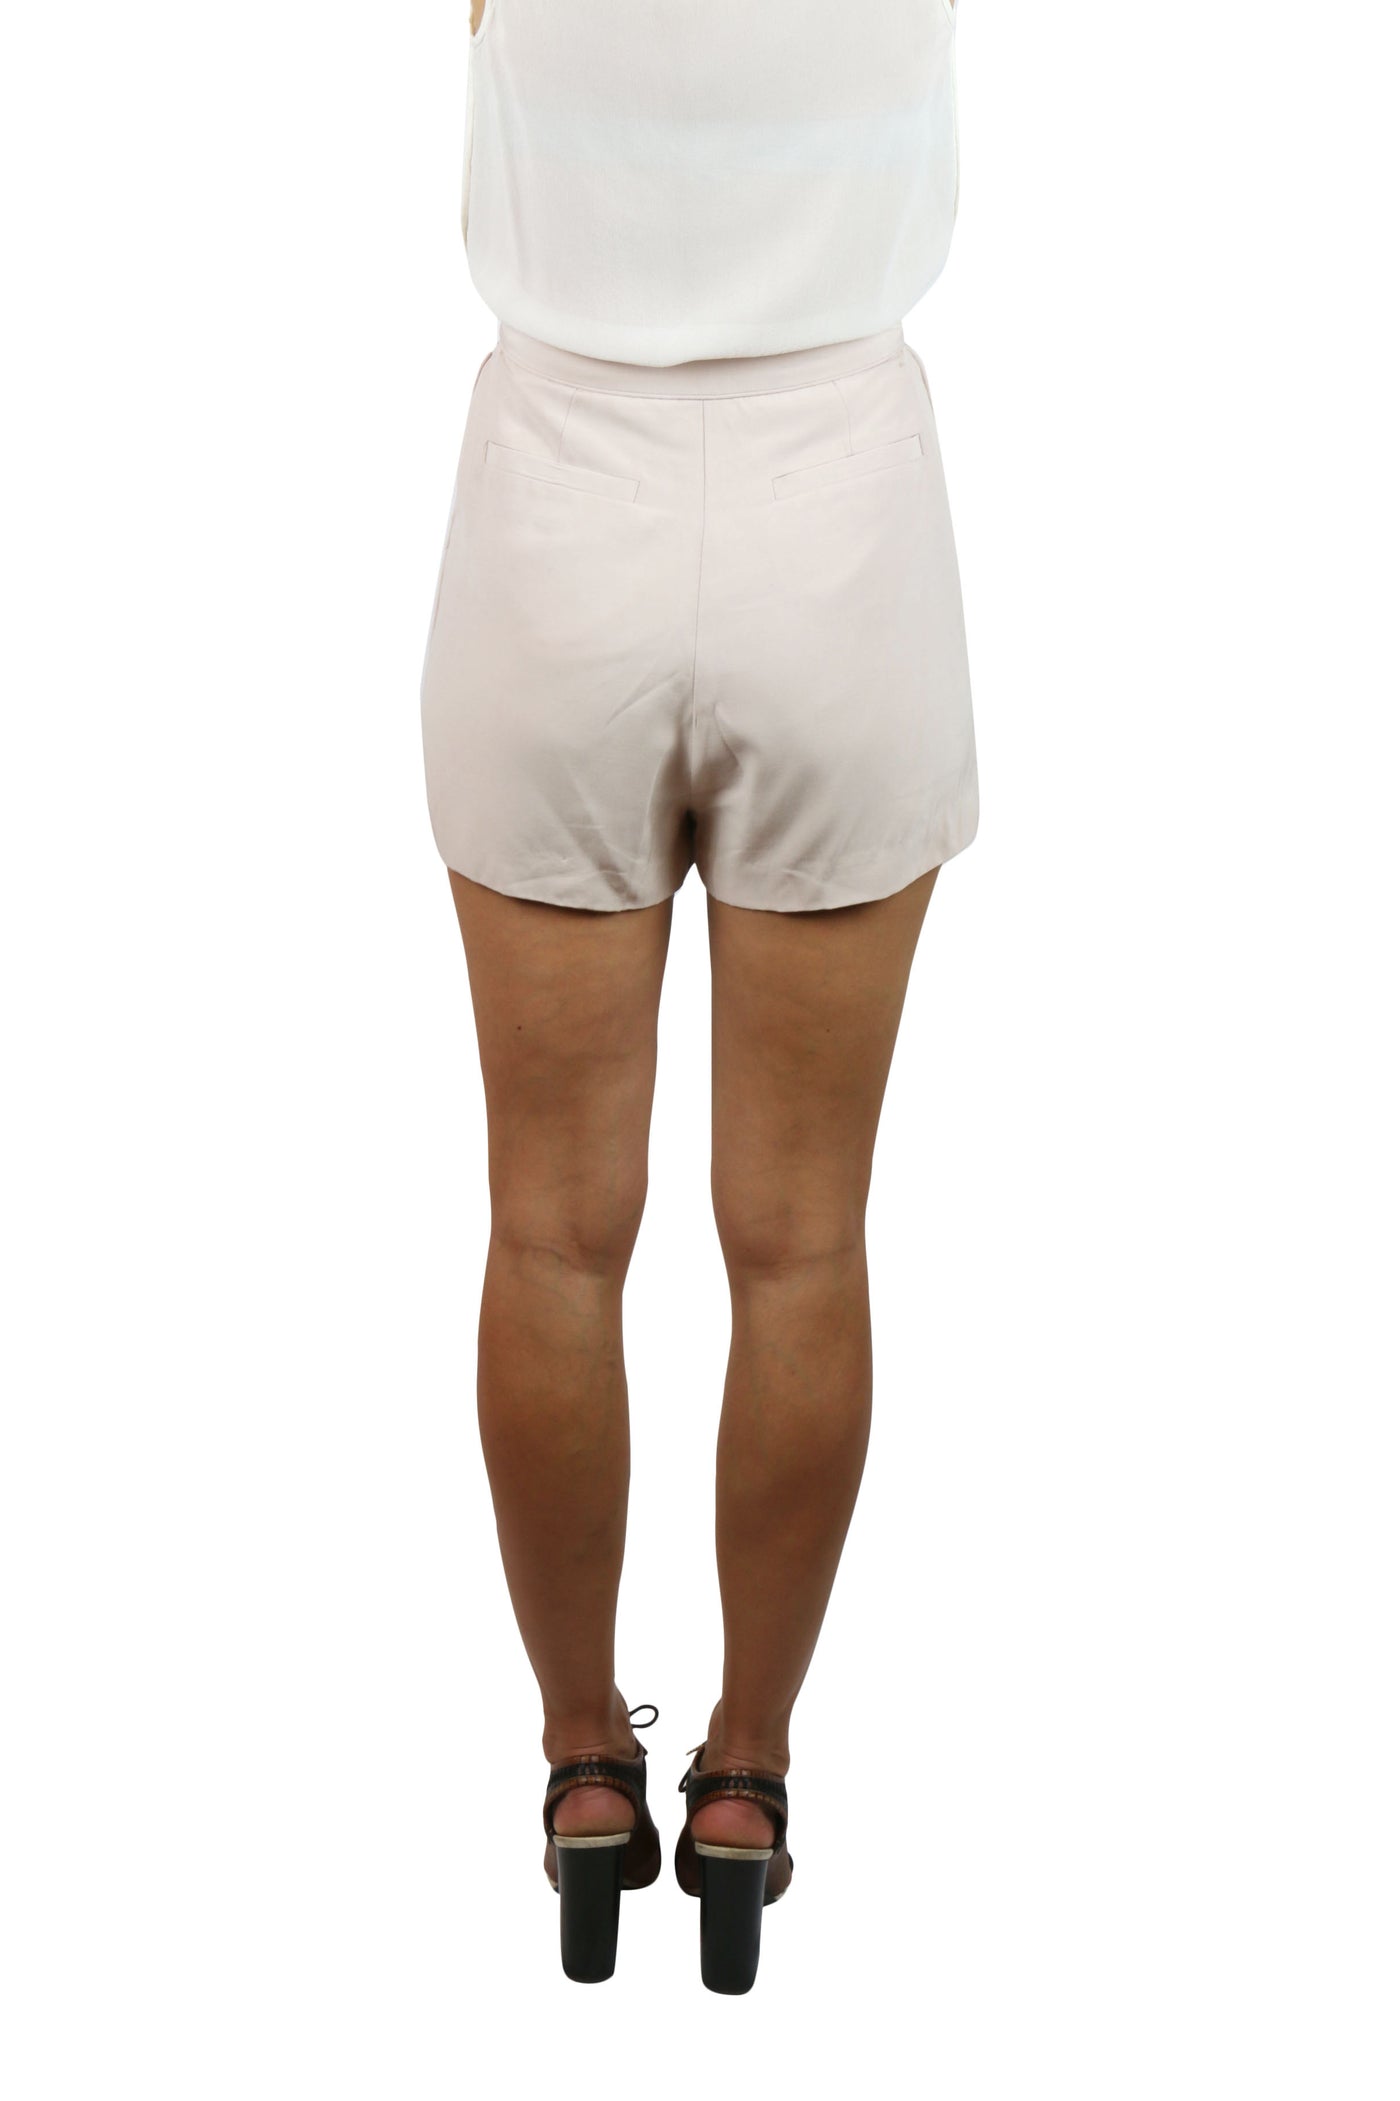 Champaign lace panel shorts